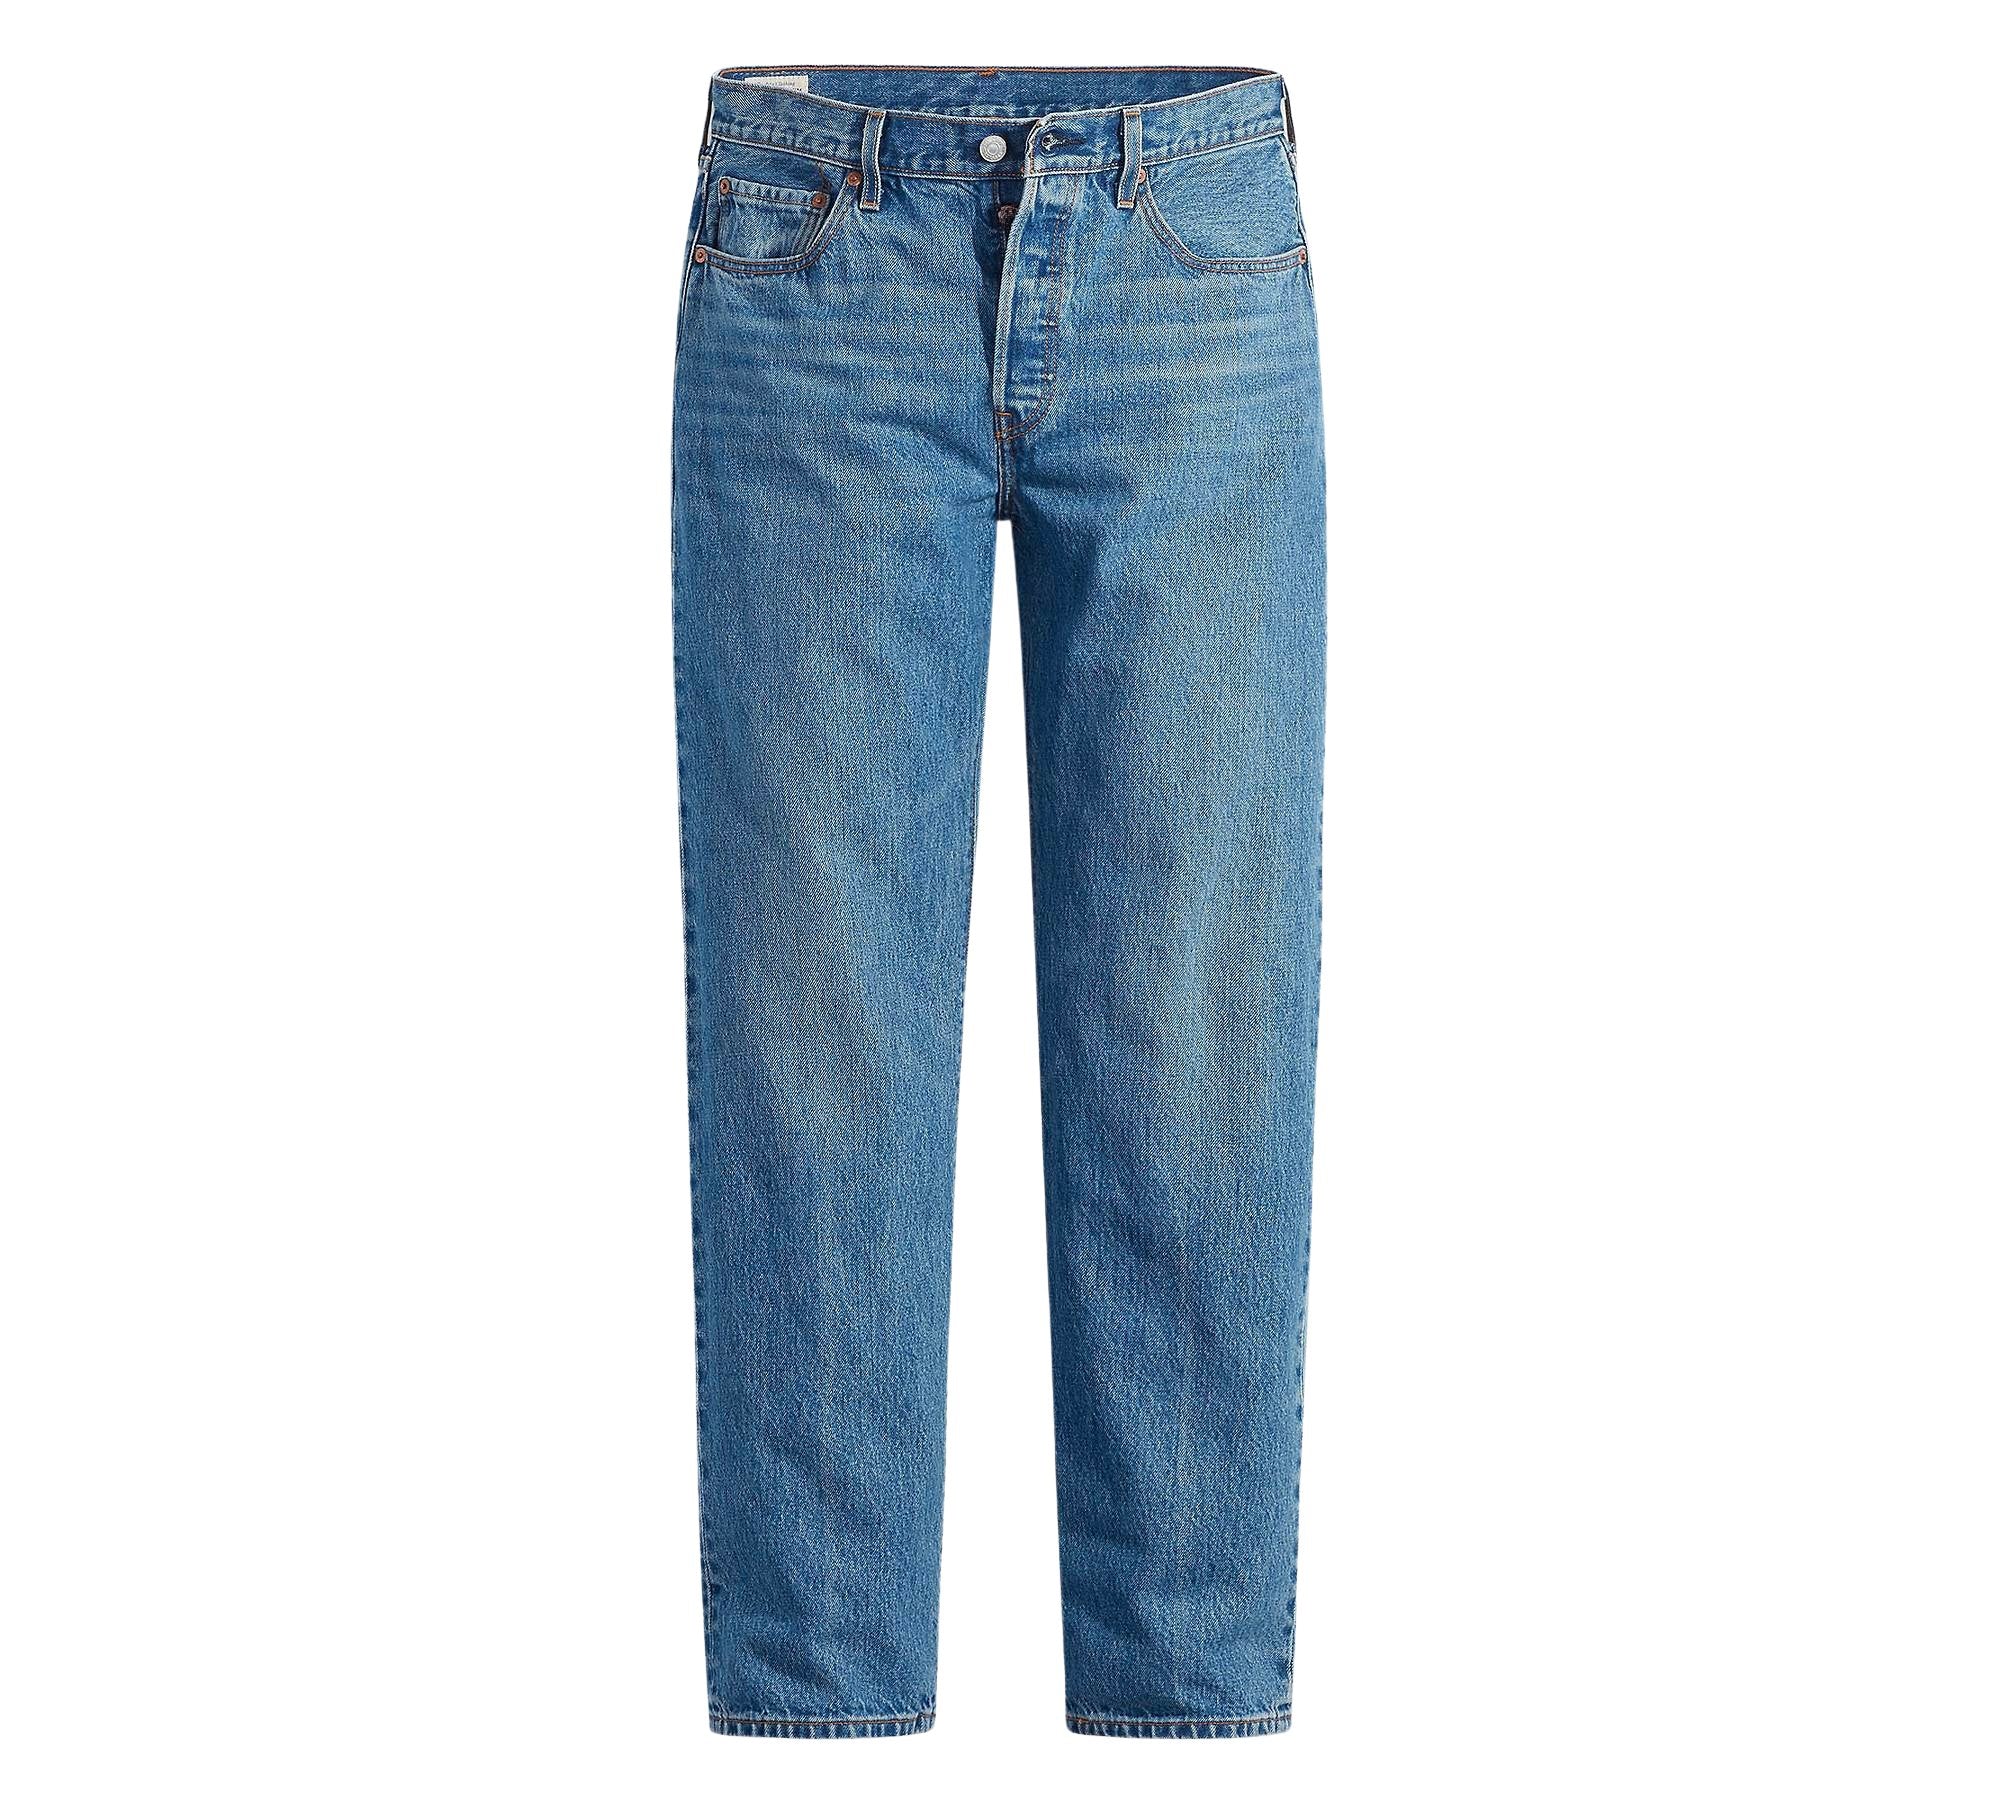 4 Pack - Vintage LEVI'S Classic Blue Zip Fly Jeans - Waist 31 - Length 32 - Vintage Superstore Online